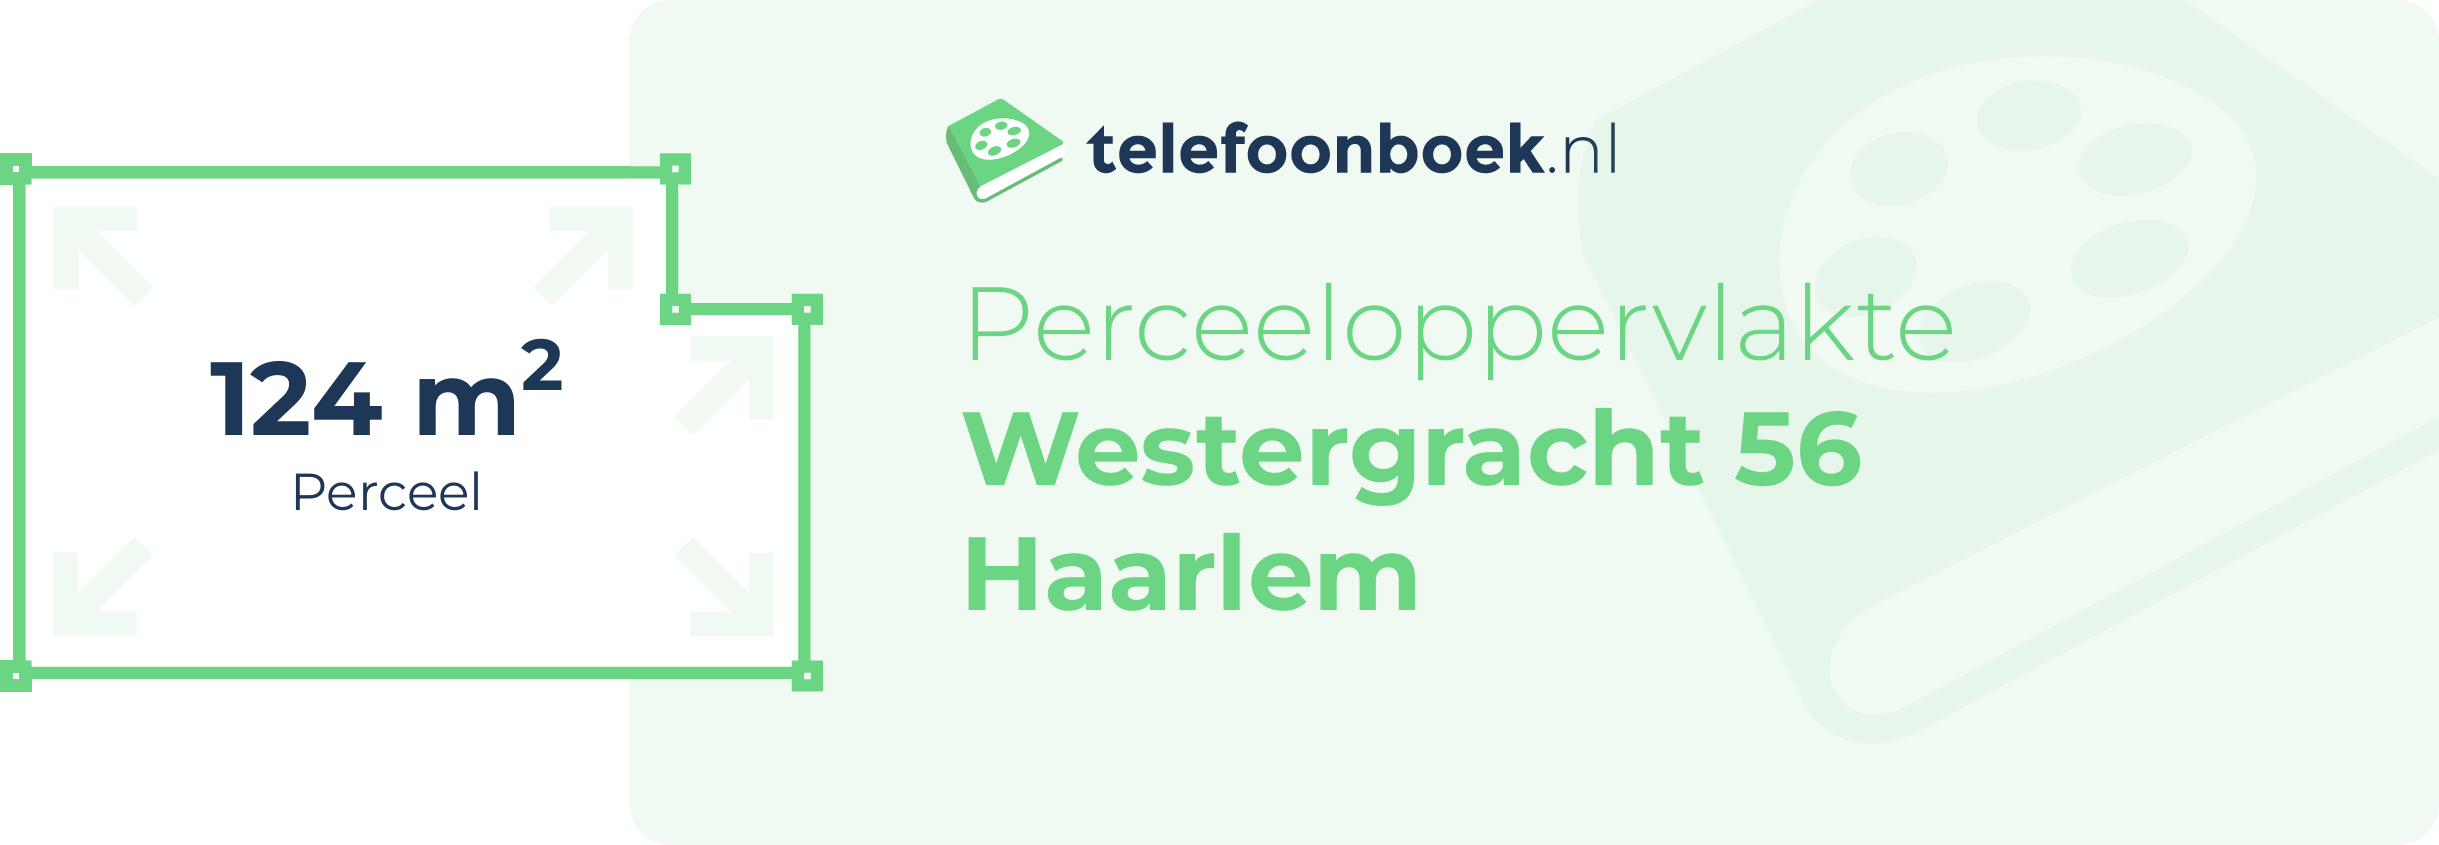 Perceeloppervlakte Westergracht 56 Haarlem